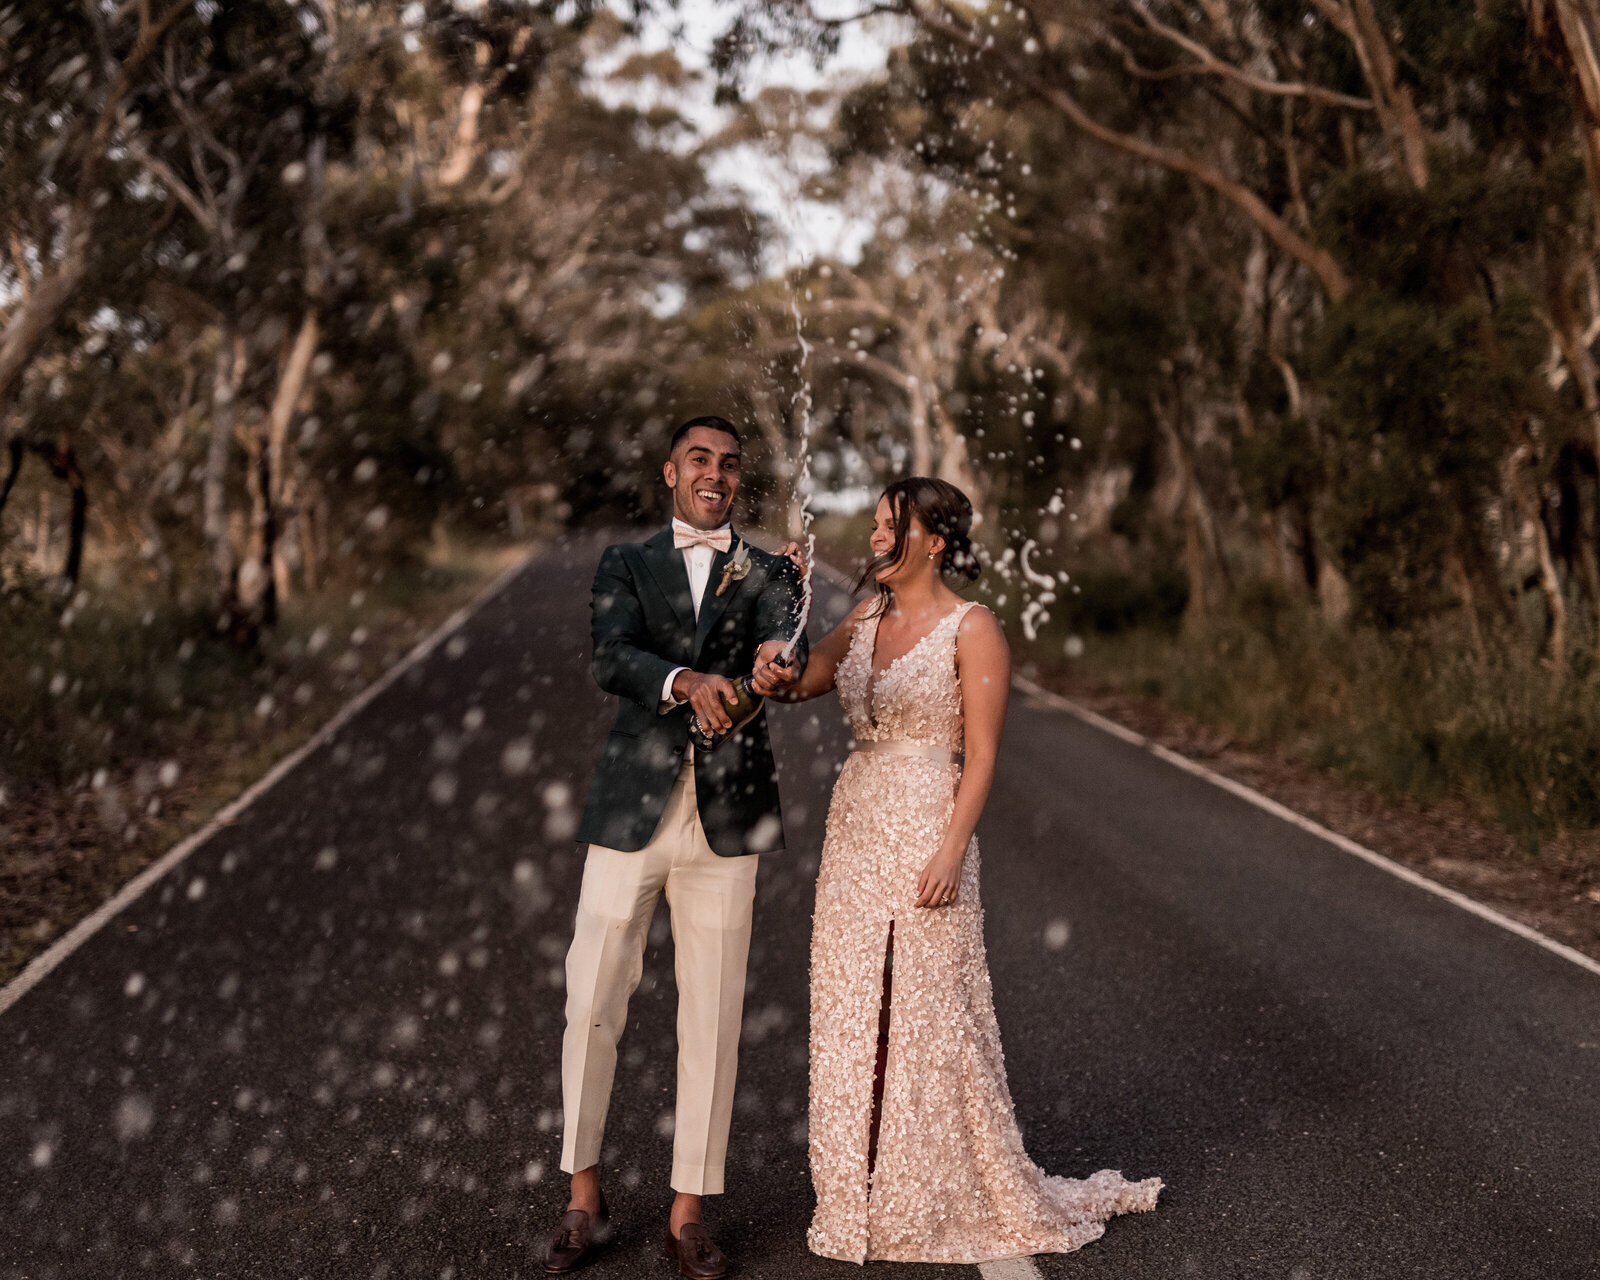 Chloe-Benny-Rexvil-Photography-Adelaide-Wedding-Photographer-490